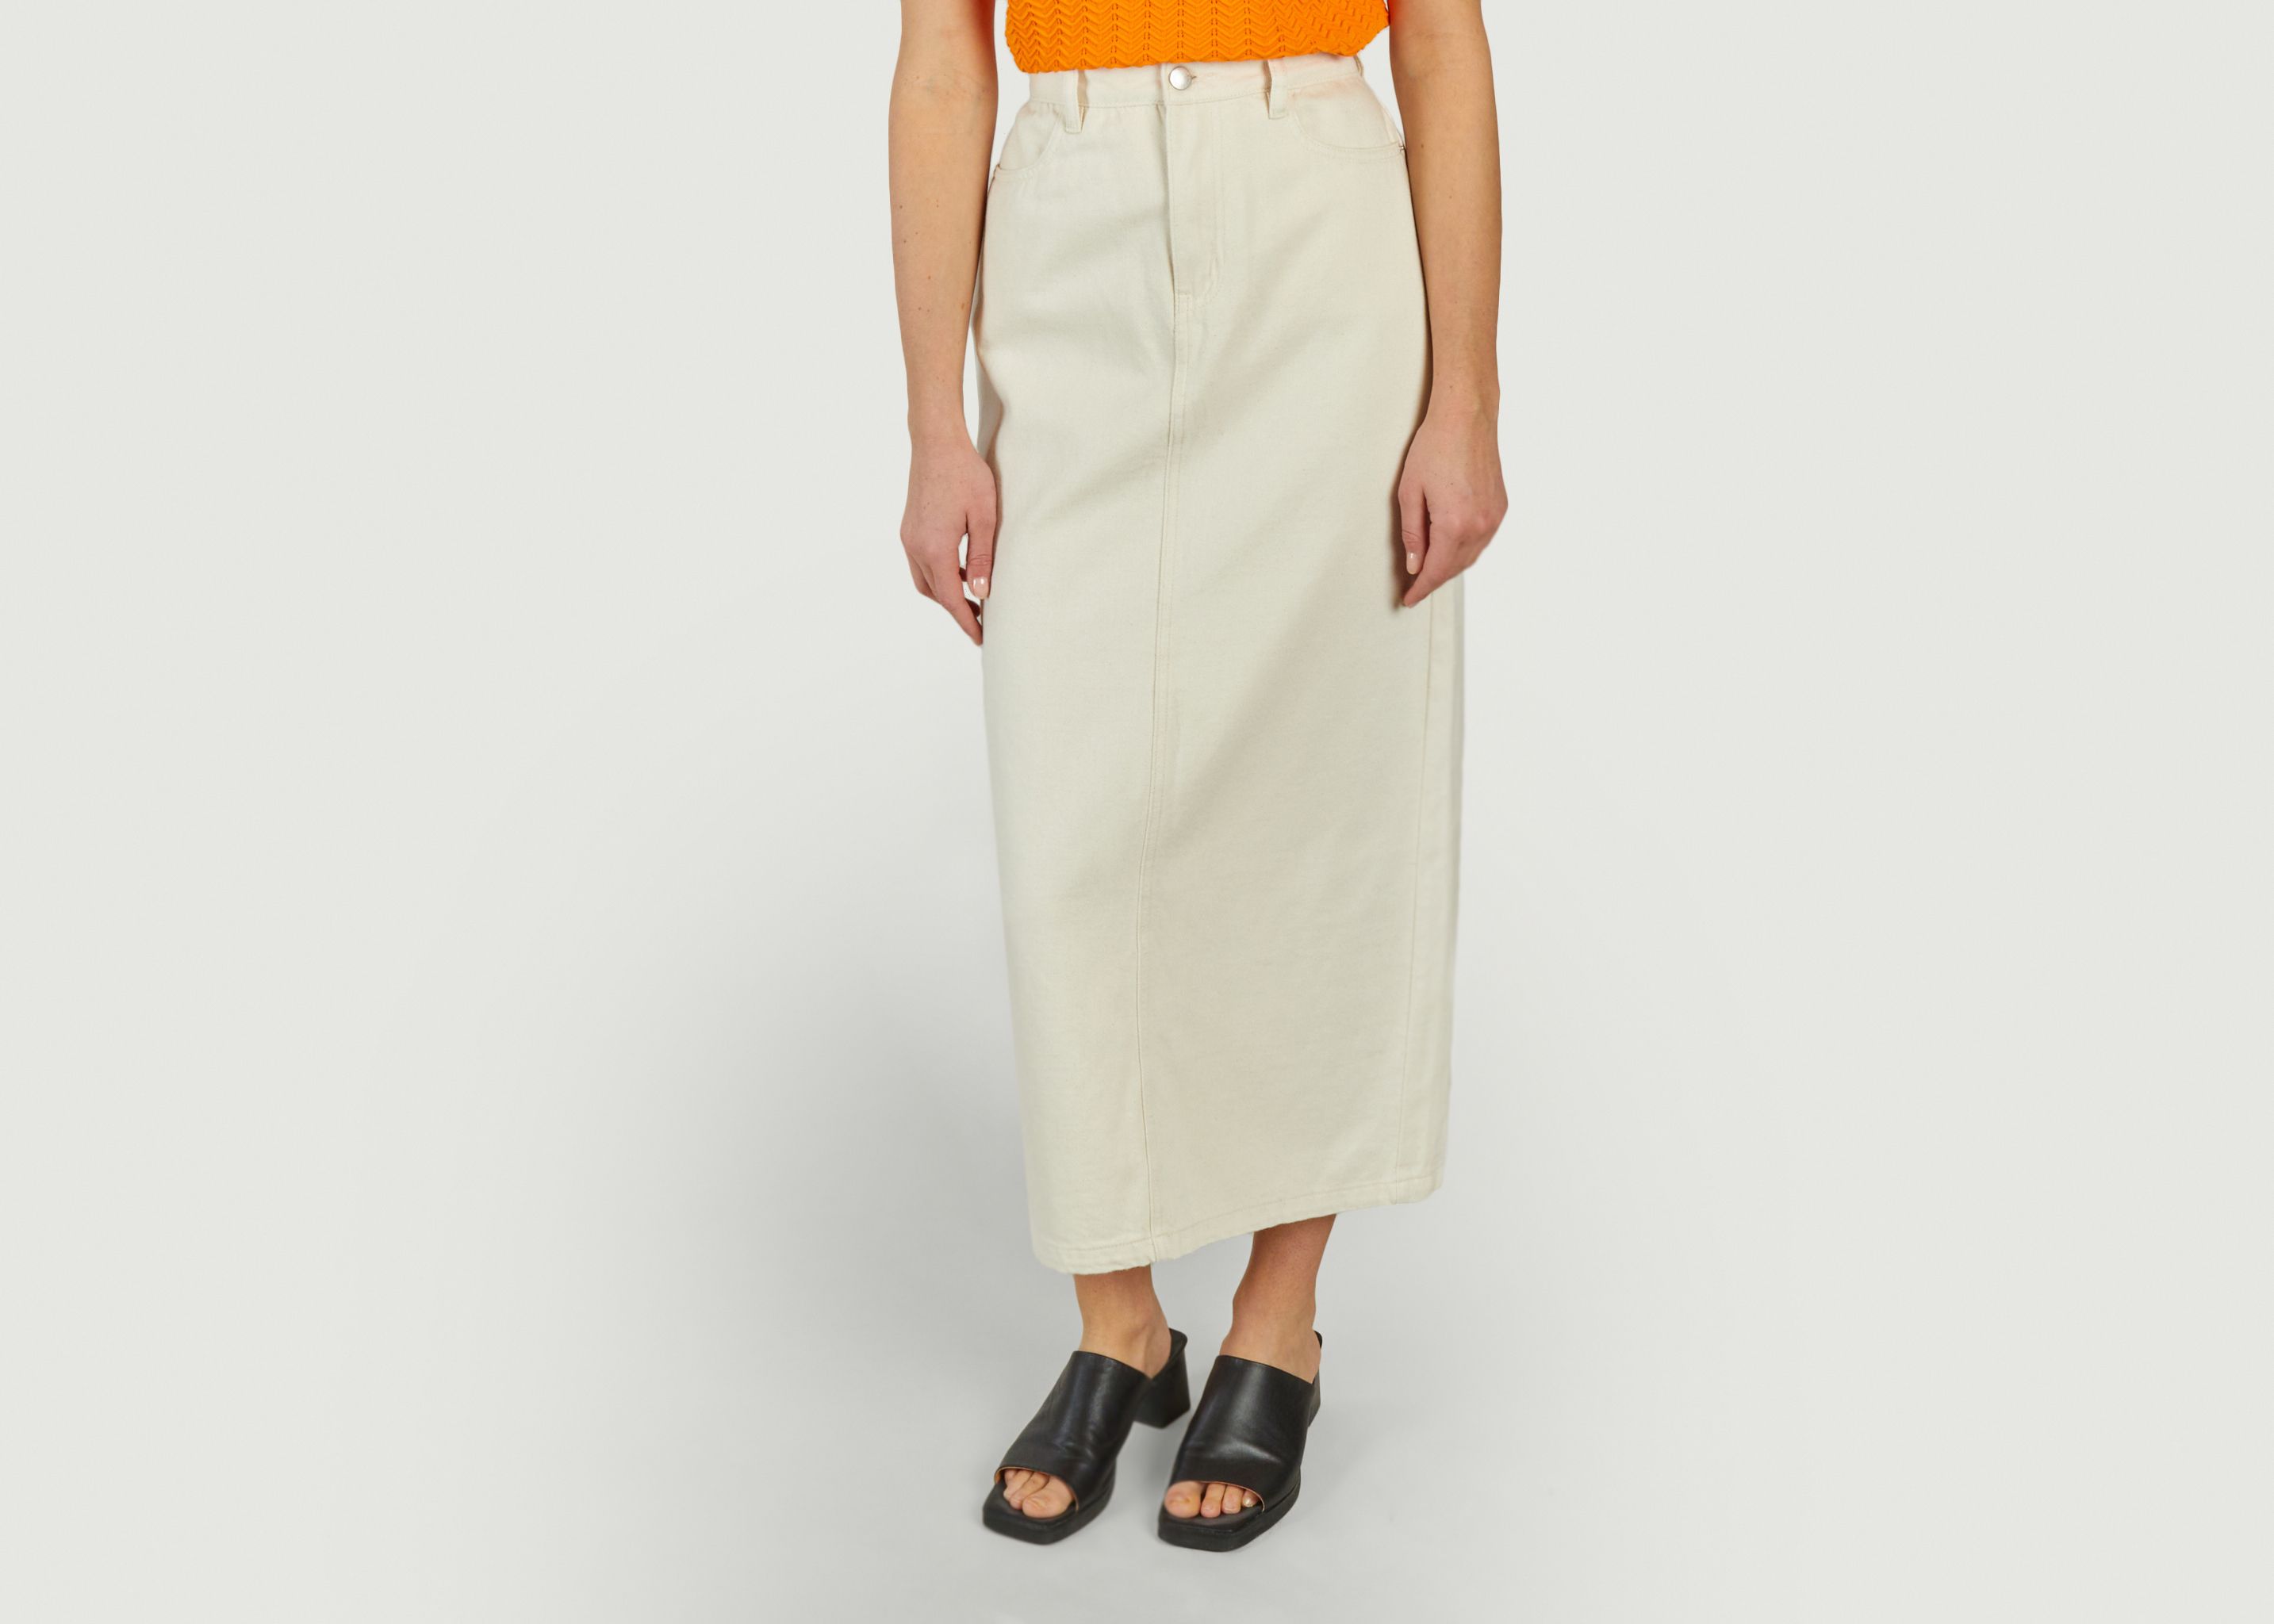 Long, straight skirt in Floyd-dyed denim - Suncoo